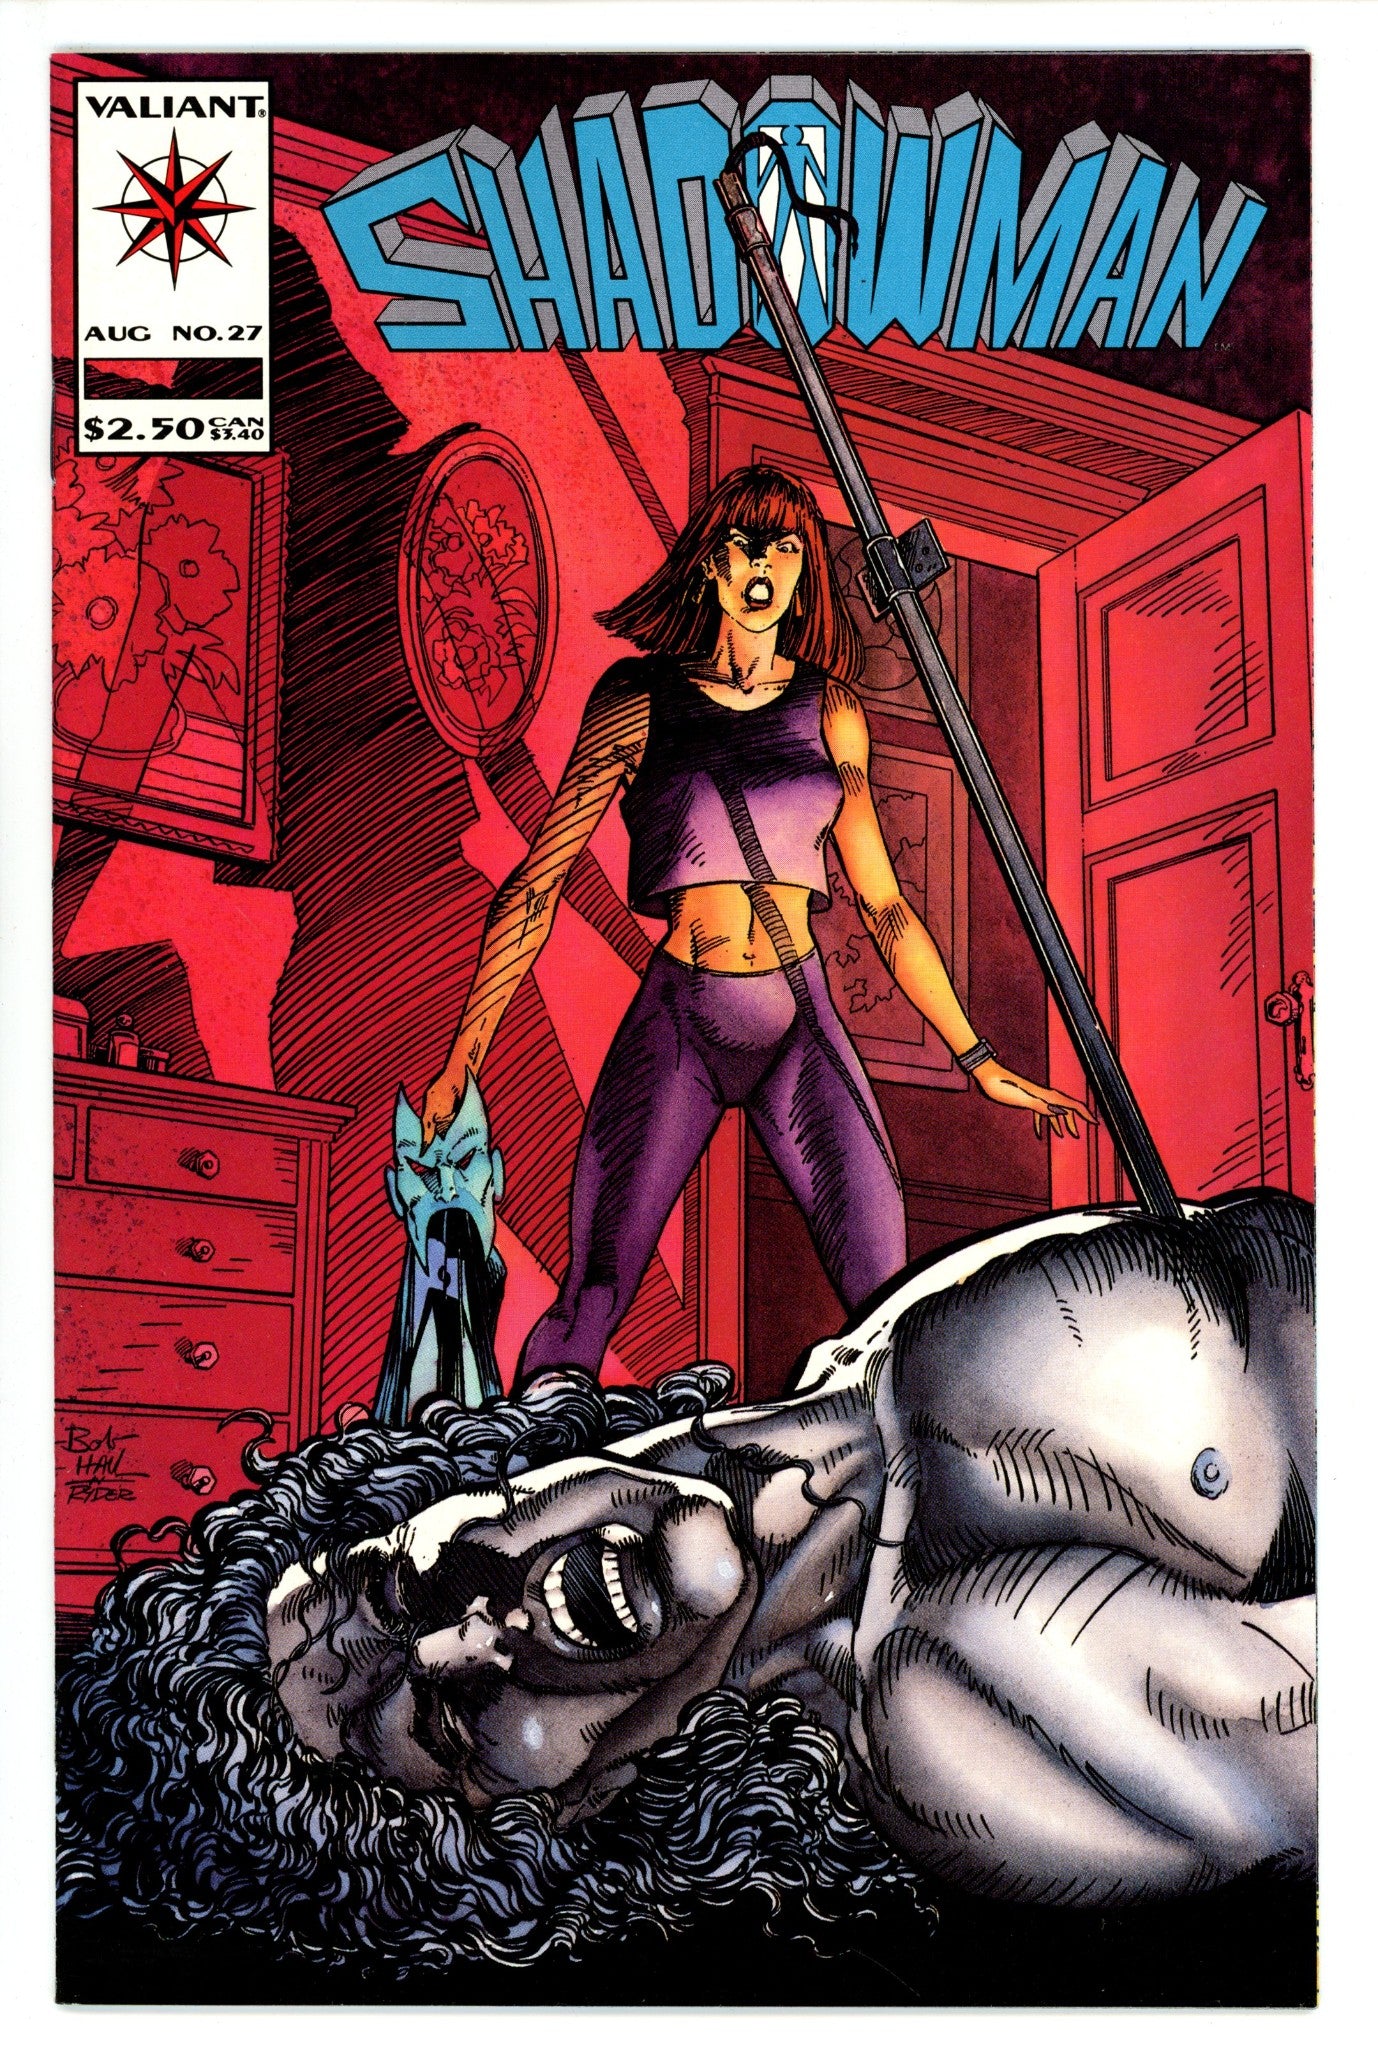 Shadowman Vol 1 27 (1994)